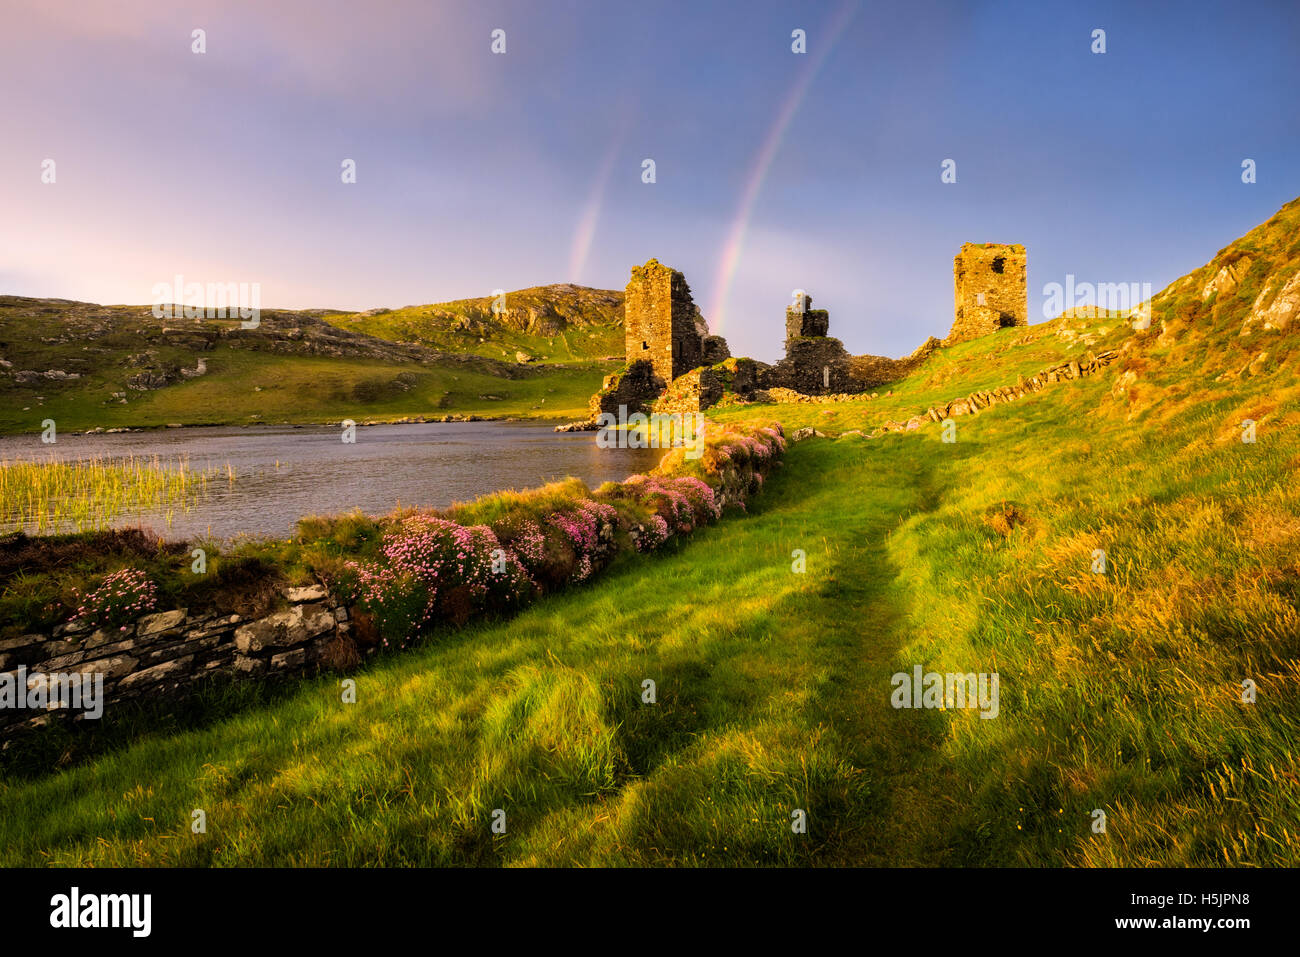 Dunlough Castle - Three castles west cork, Ireland Stock Photo